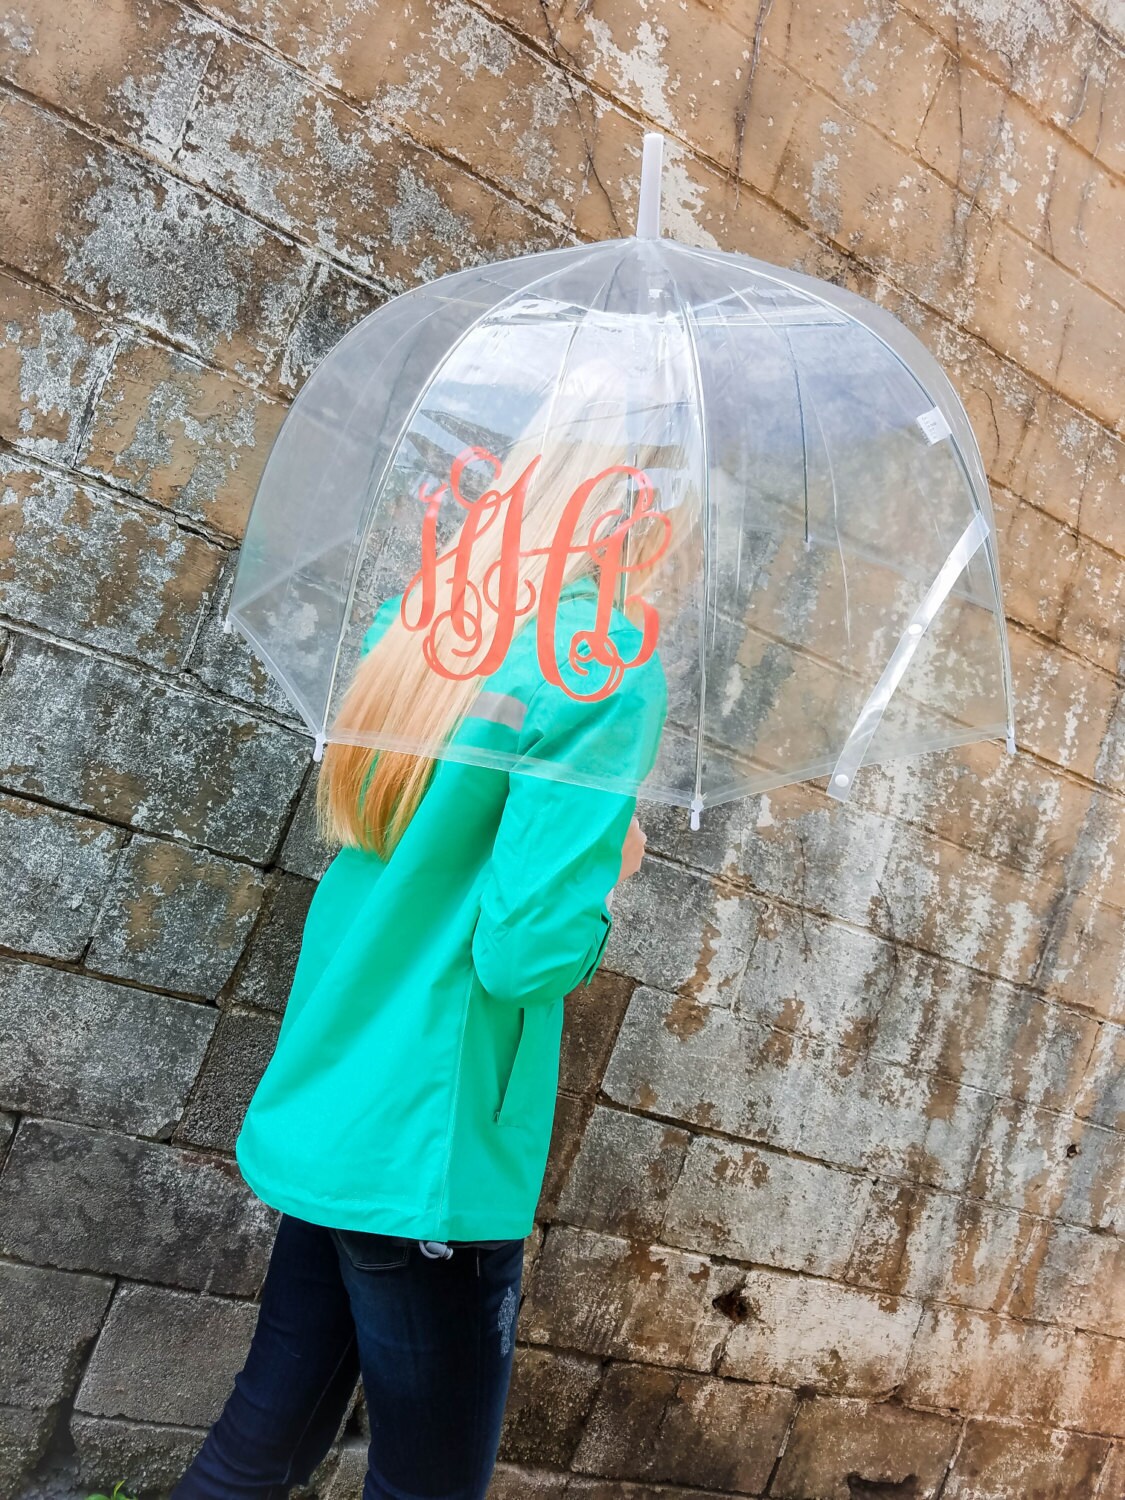 SALE Monogrammed Umbrella Clear Dome Umbrella Gift Under